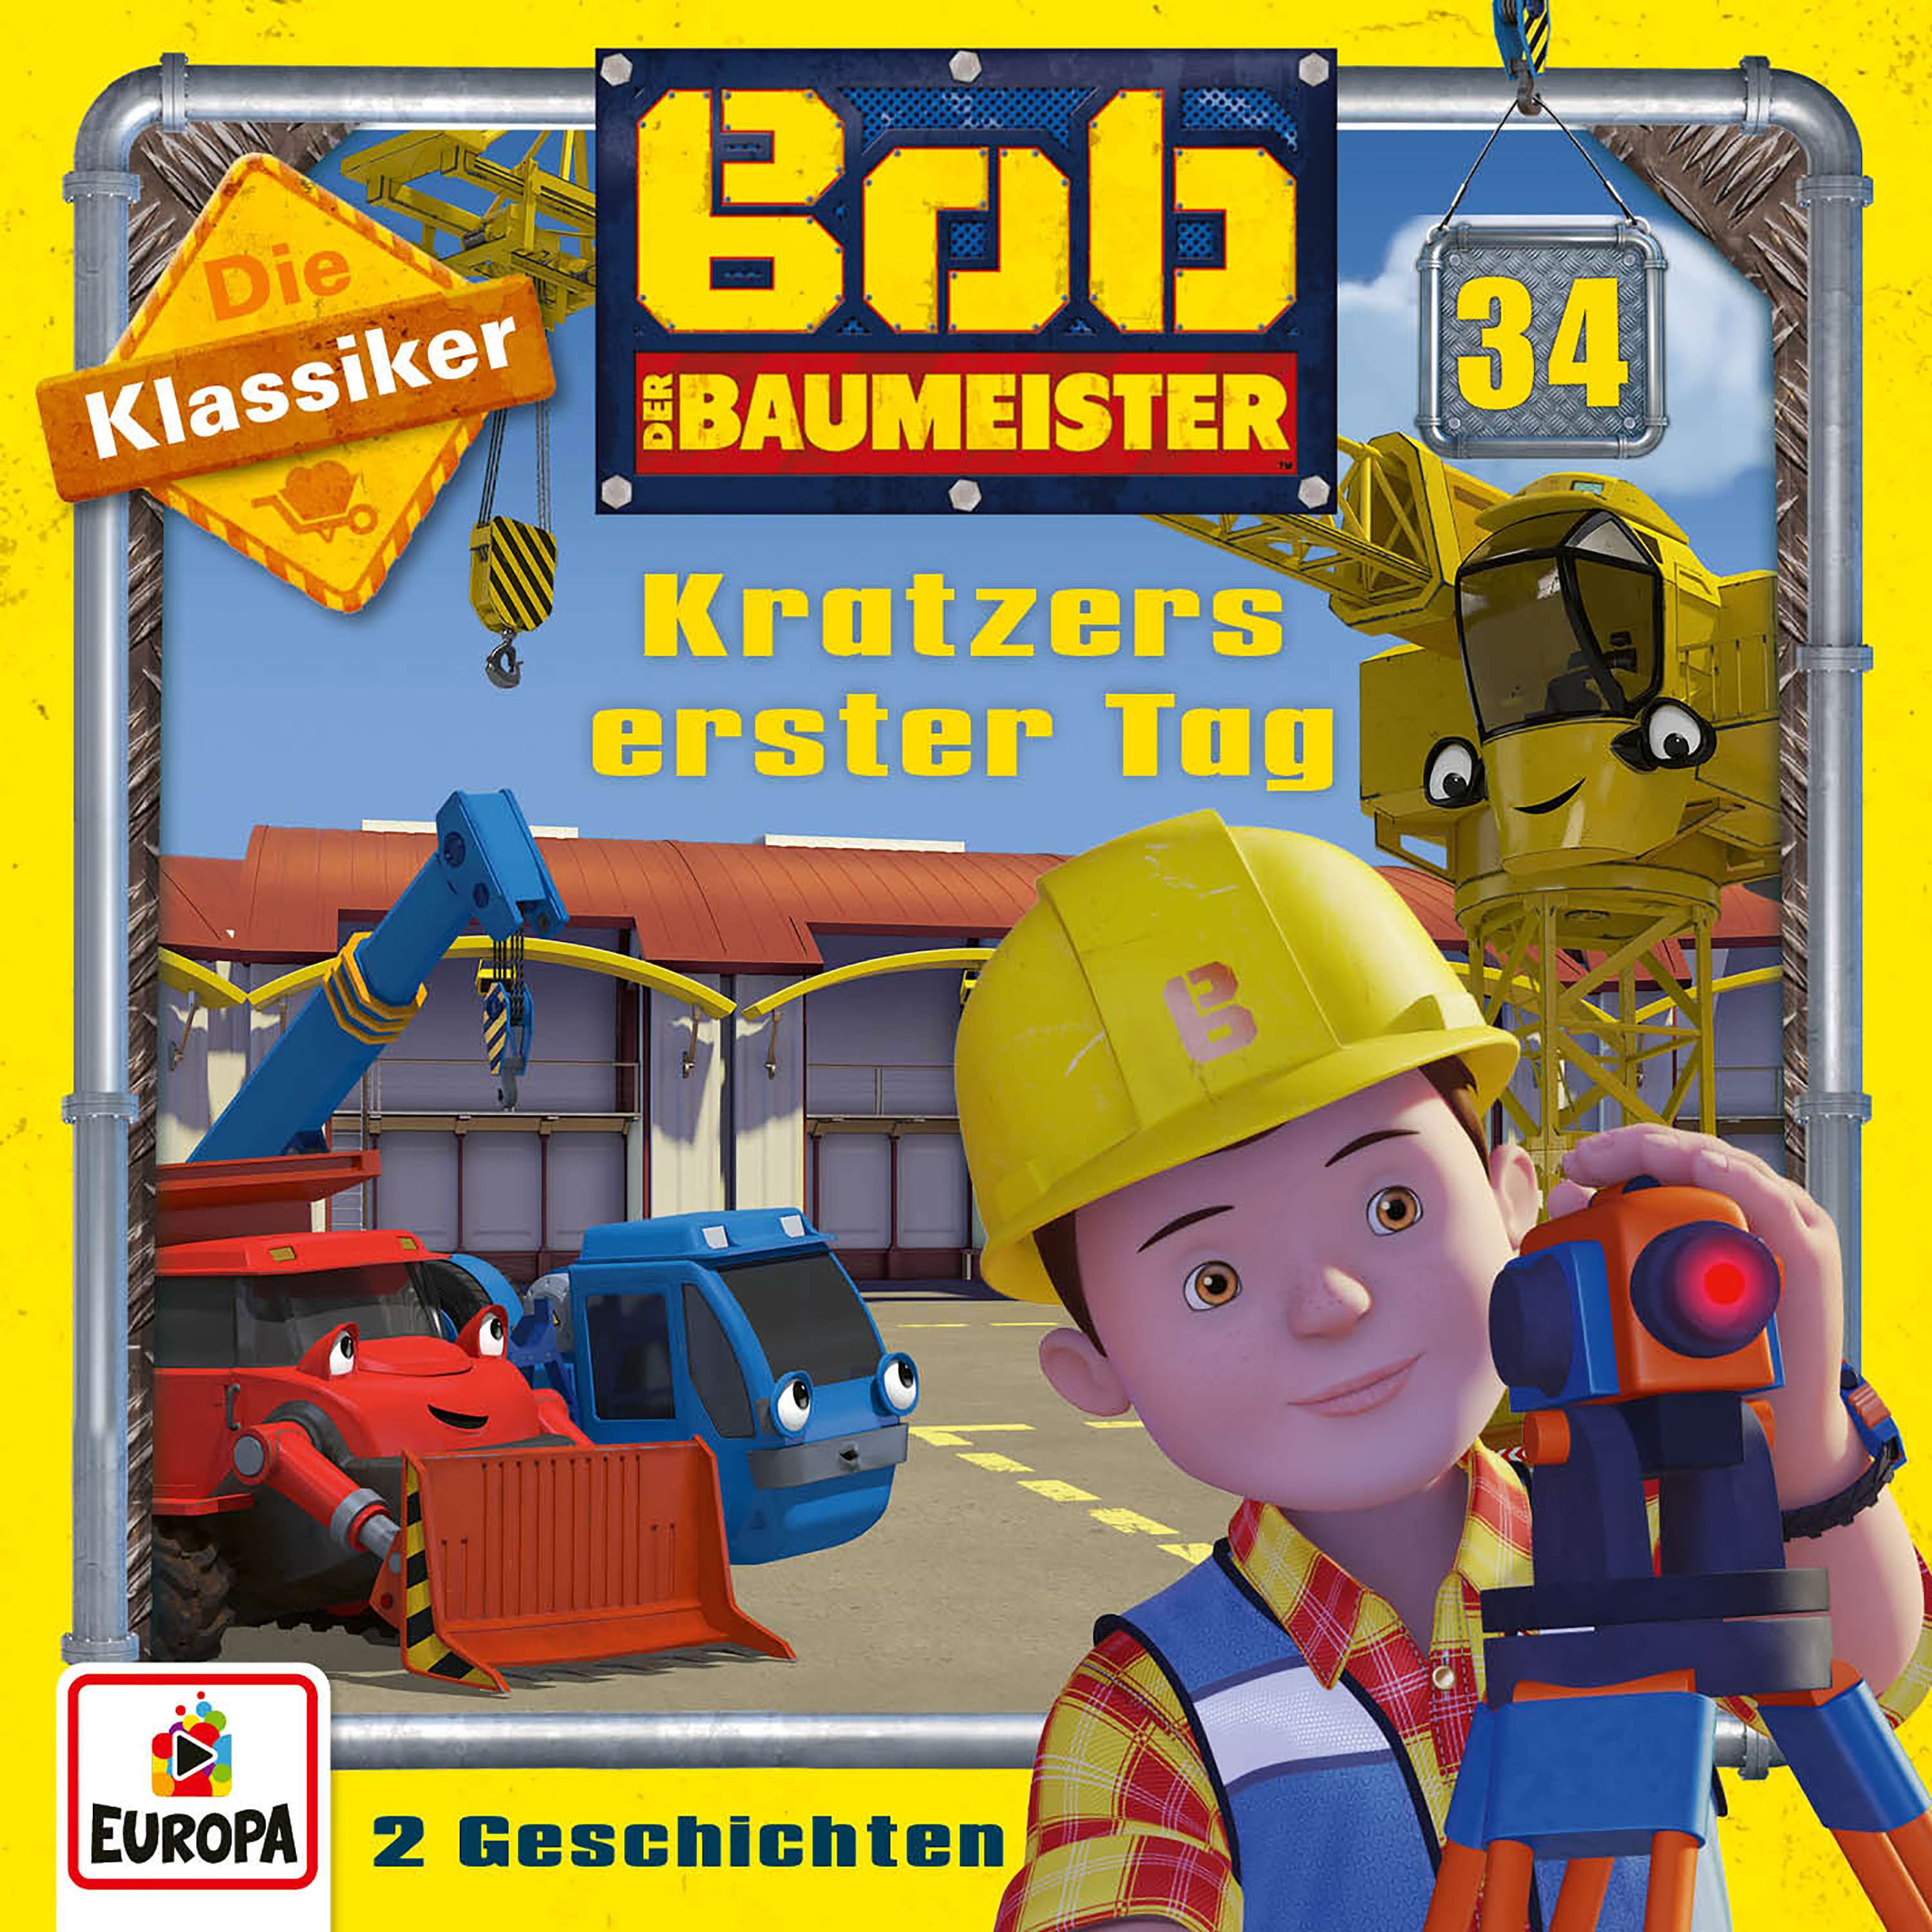 Bob der Baumeister: Kratzers erster Tag (Die Klassiker)